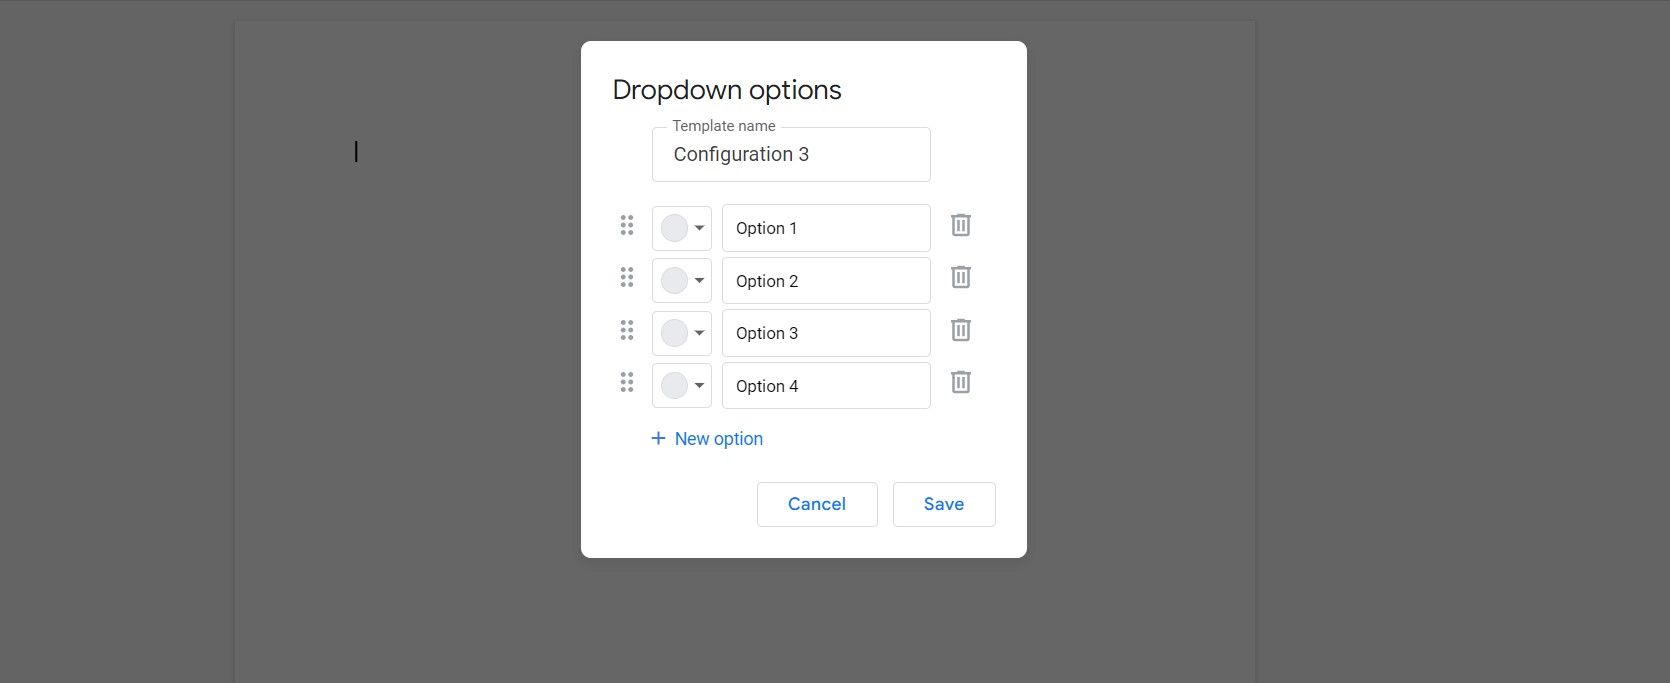 Creating a dropdown list in Google Docs